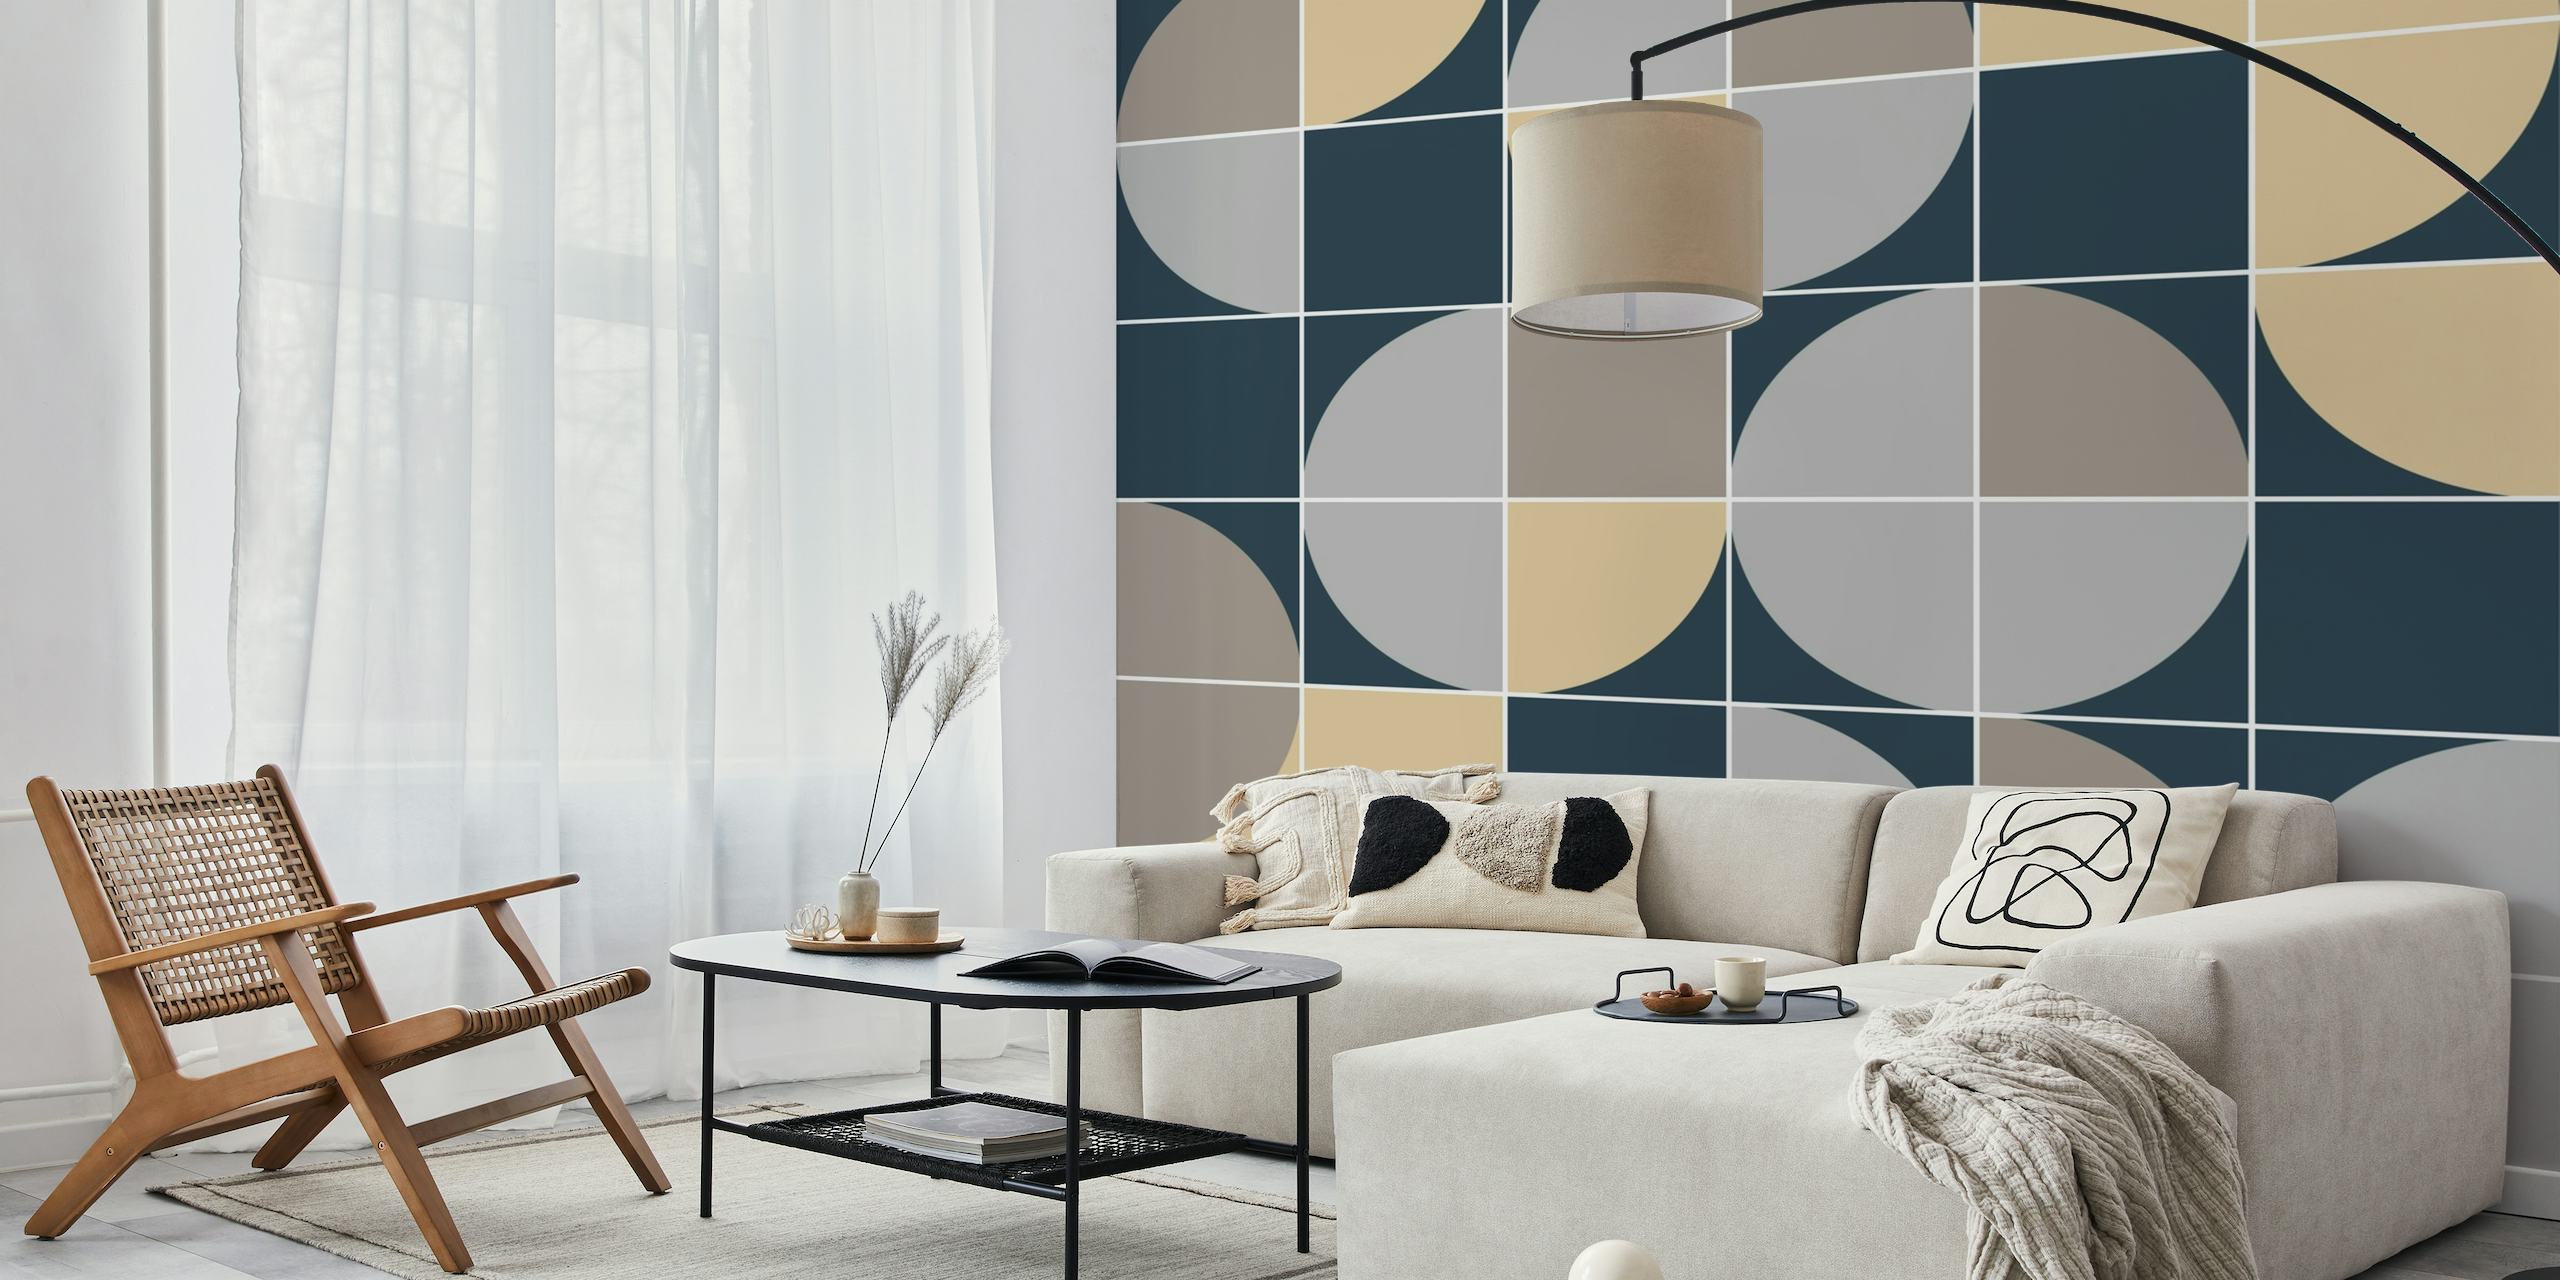 Retro mod abstrakt cirkelvægmaleri med geometrisk mønster i beige, marineblå og grå toner